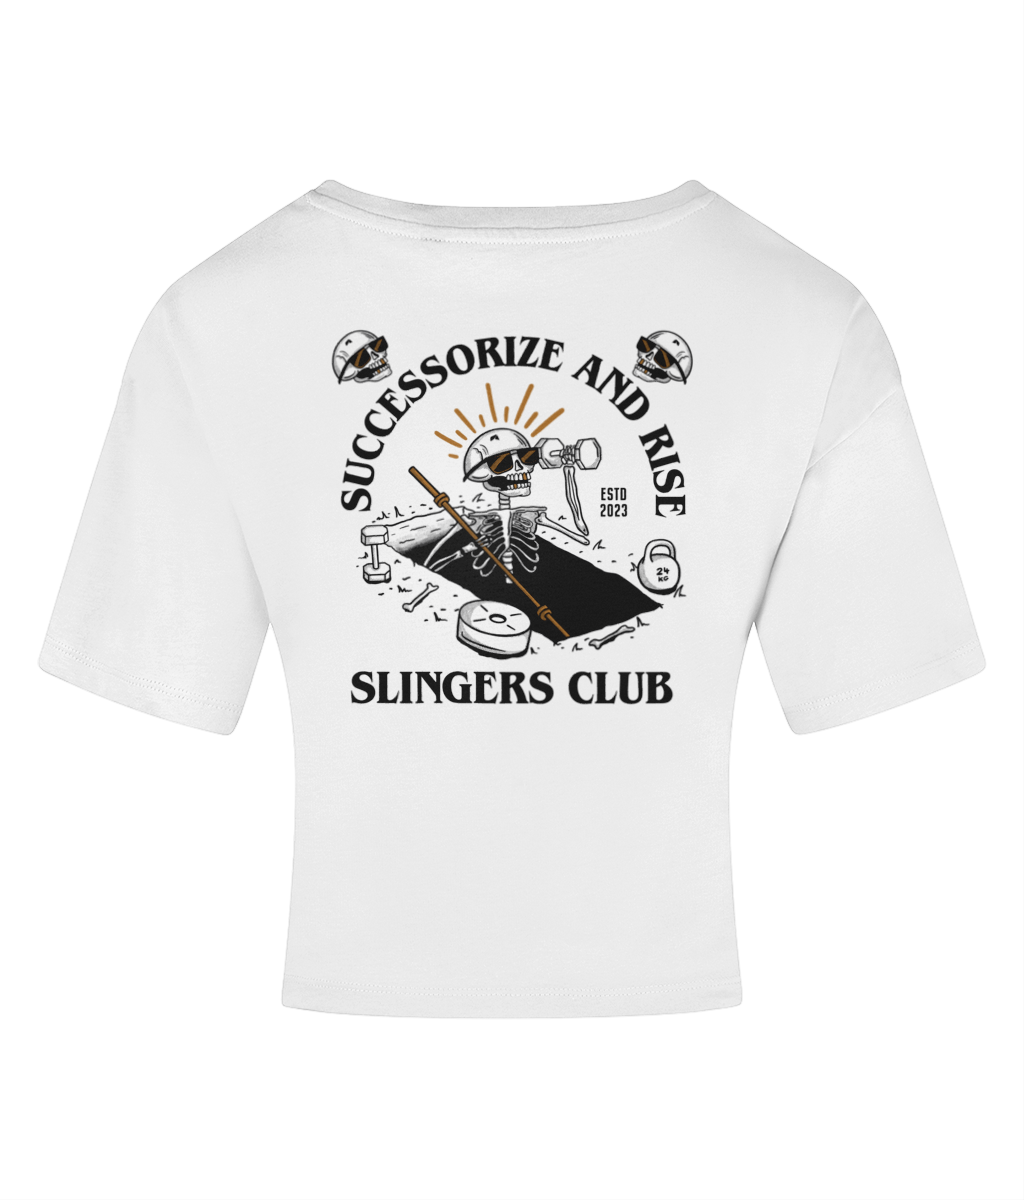 Successorize crop top - Slingers Club